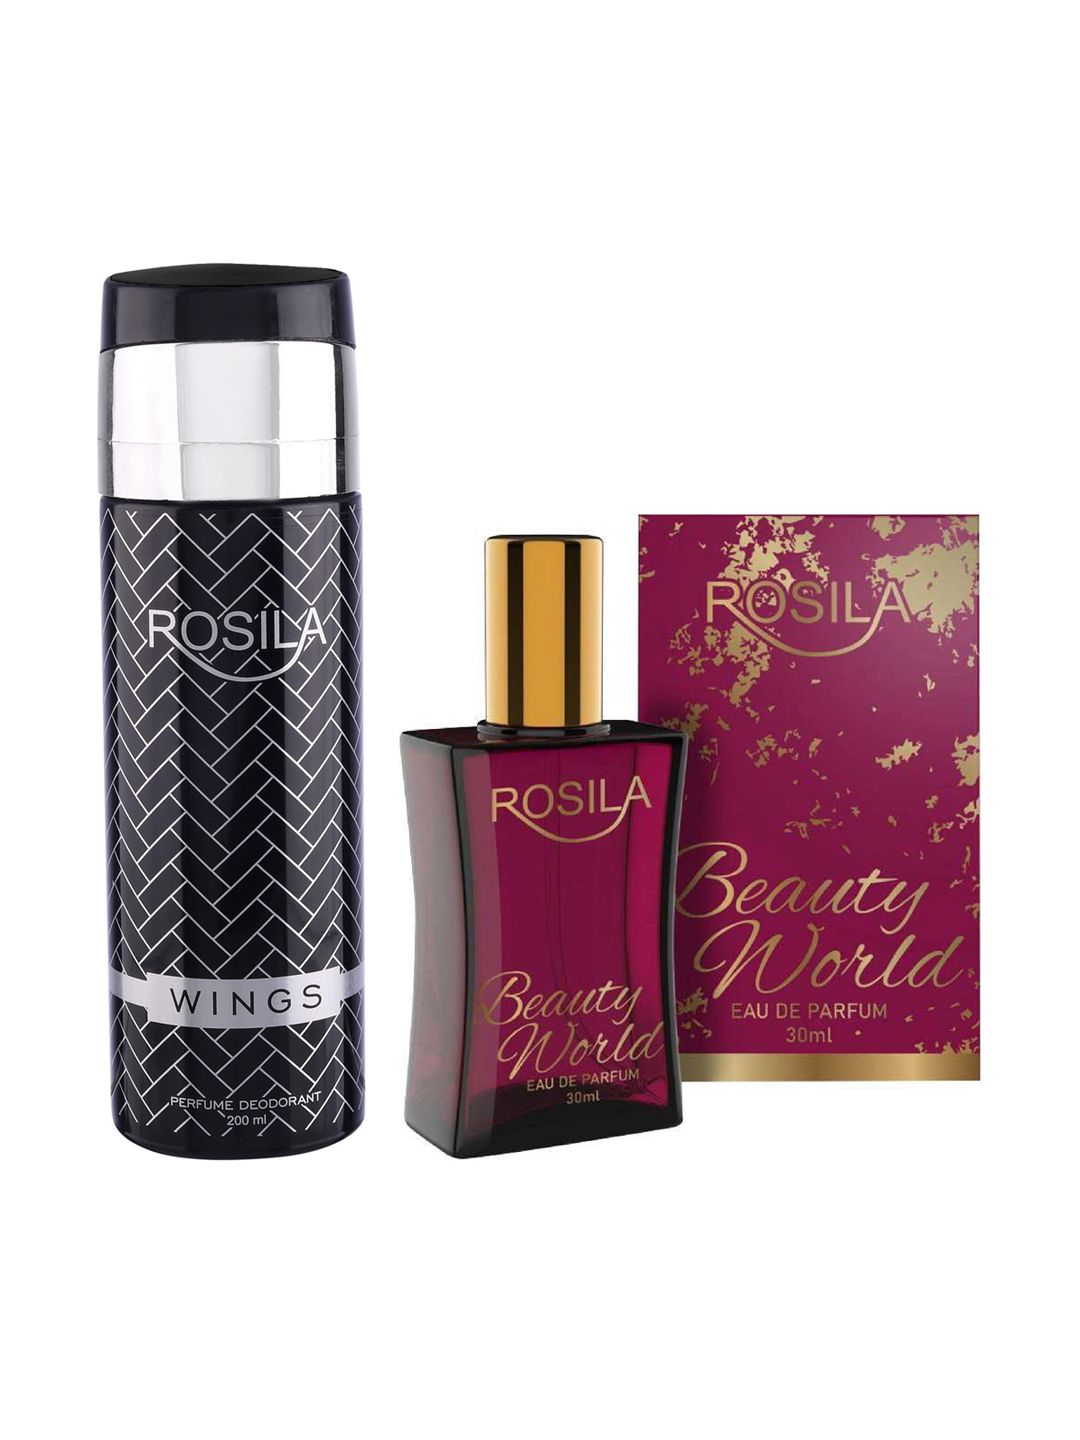 ROSILA Set of Beauty World Eau De Parfum 30 ml & Wings Deodorant 200 ml Price in India